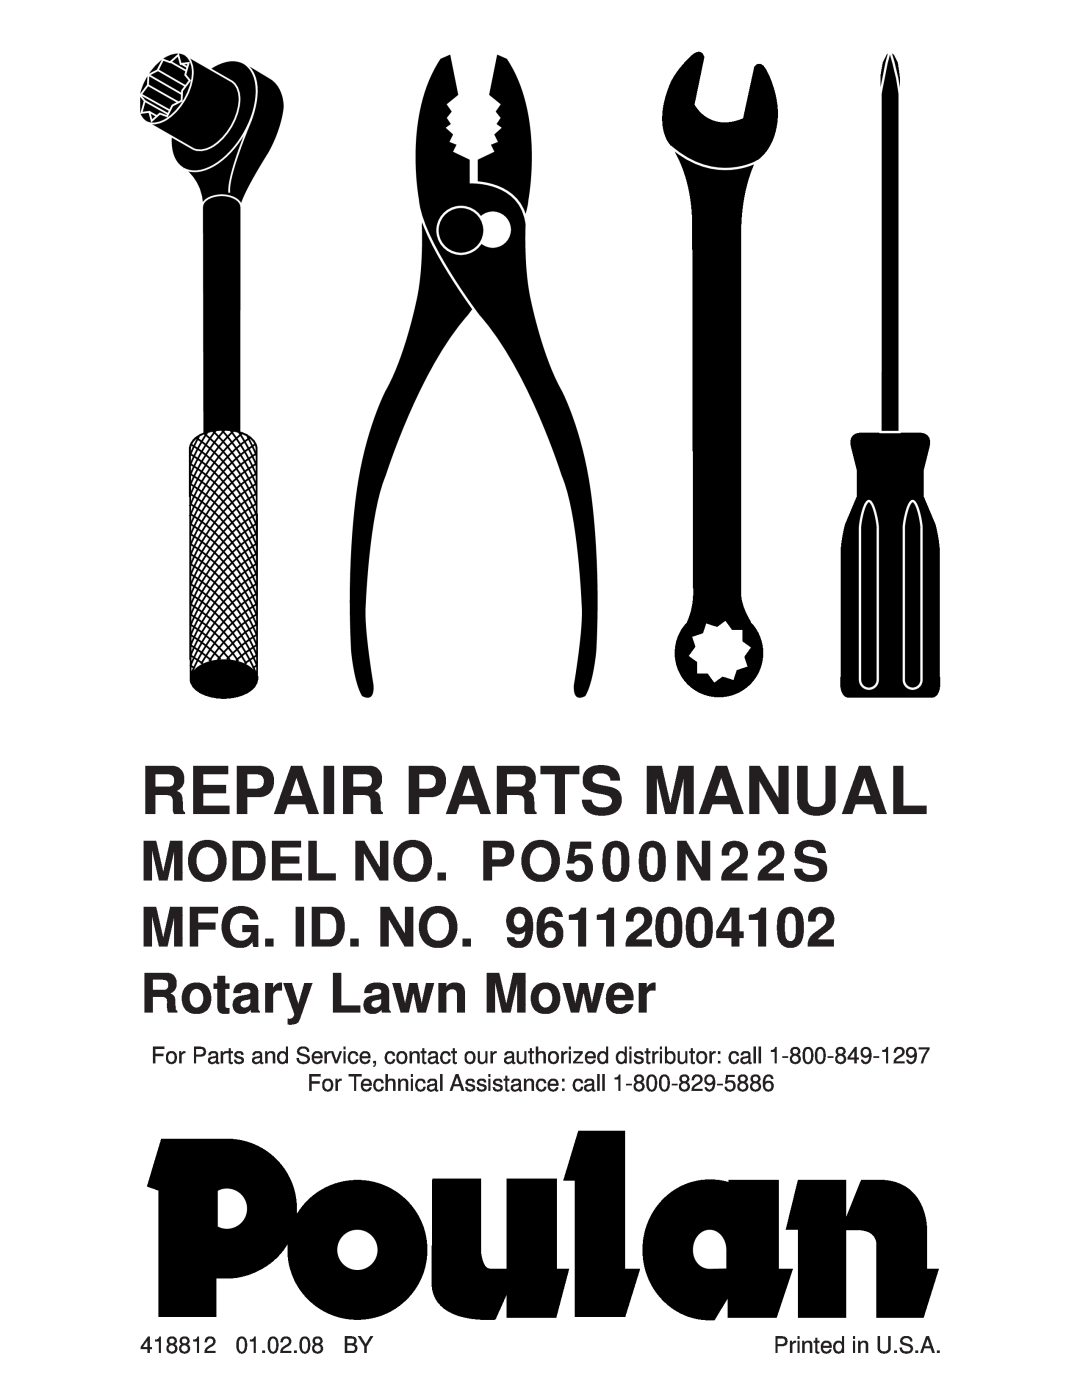 Poulan warranty Repair Parts Manual, MODEL NO. PO500N22S MFG. ID. NO. 96112004101 Rotary Lawn Mower, Limited Warranty 